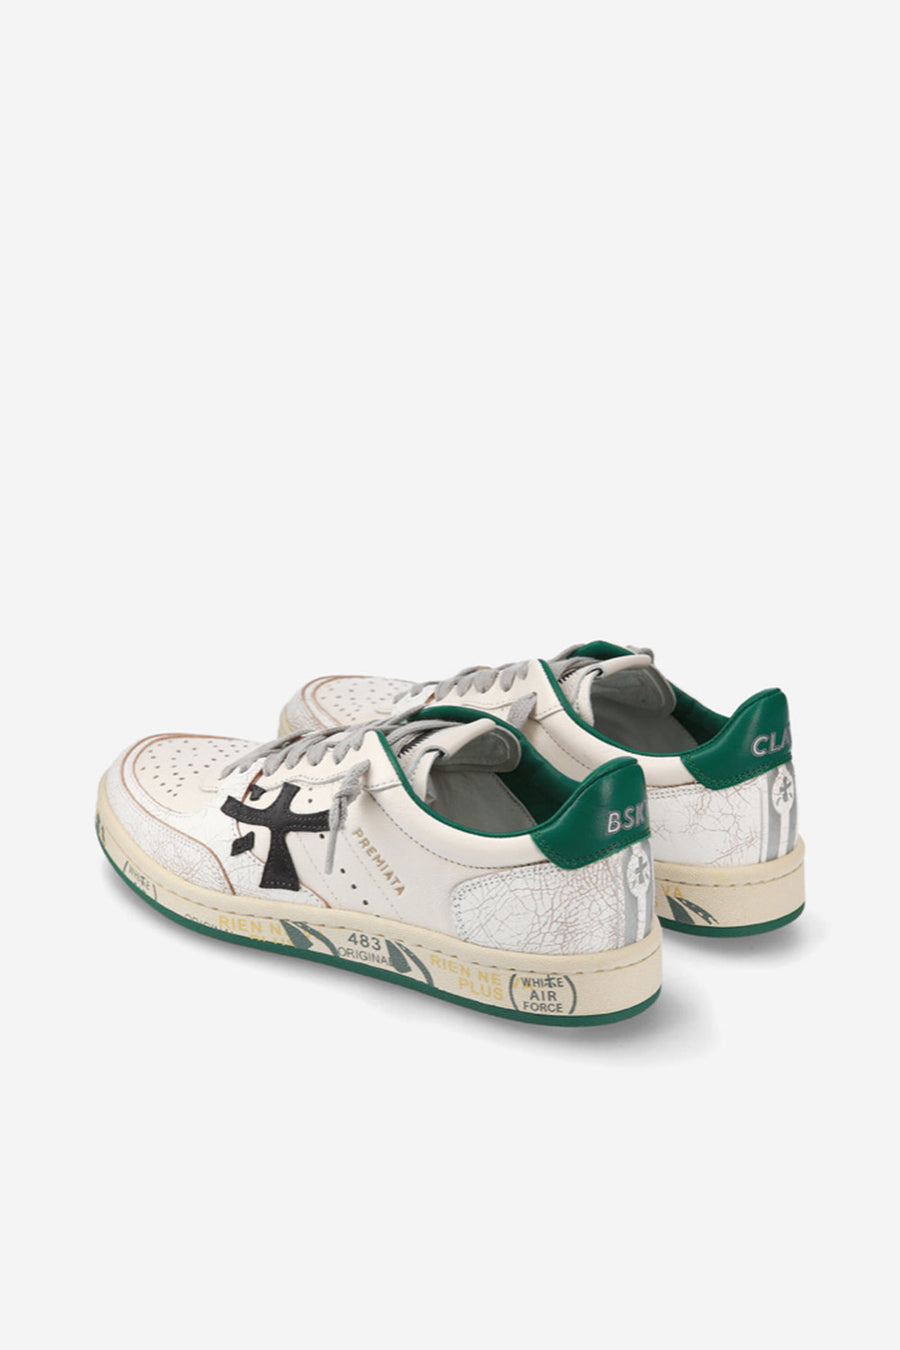 Sneakers Premiata bianco e verde bskt clayd 6778